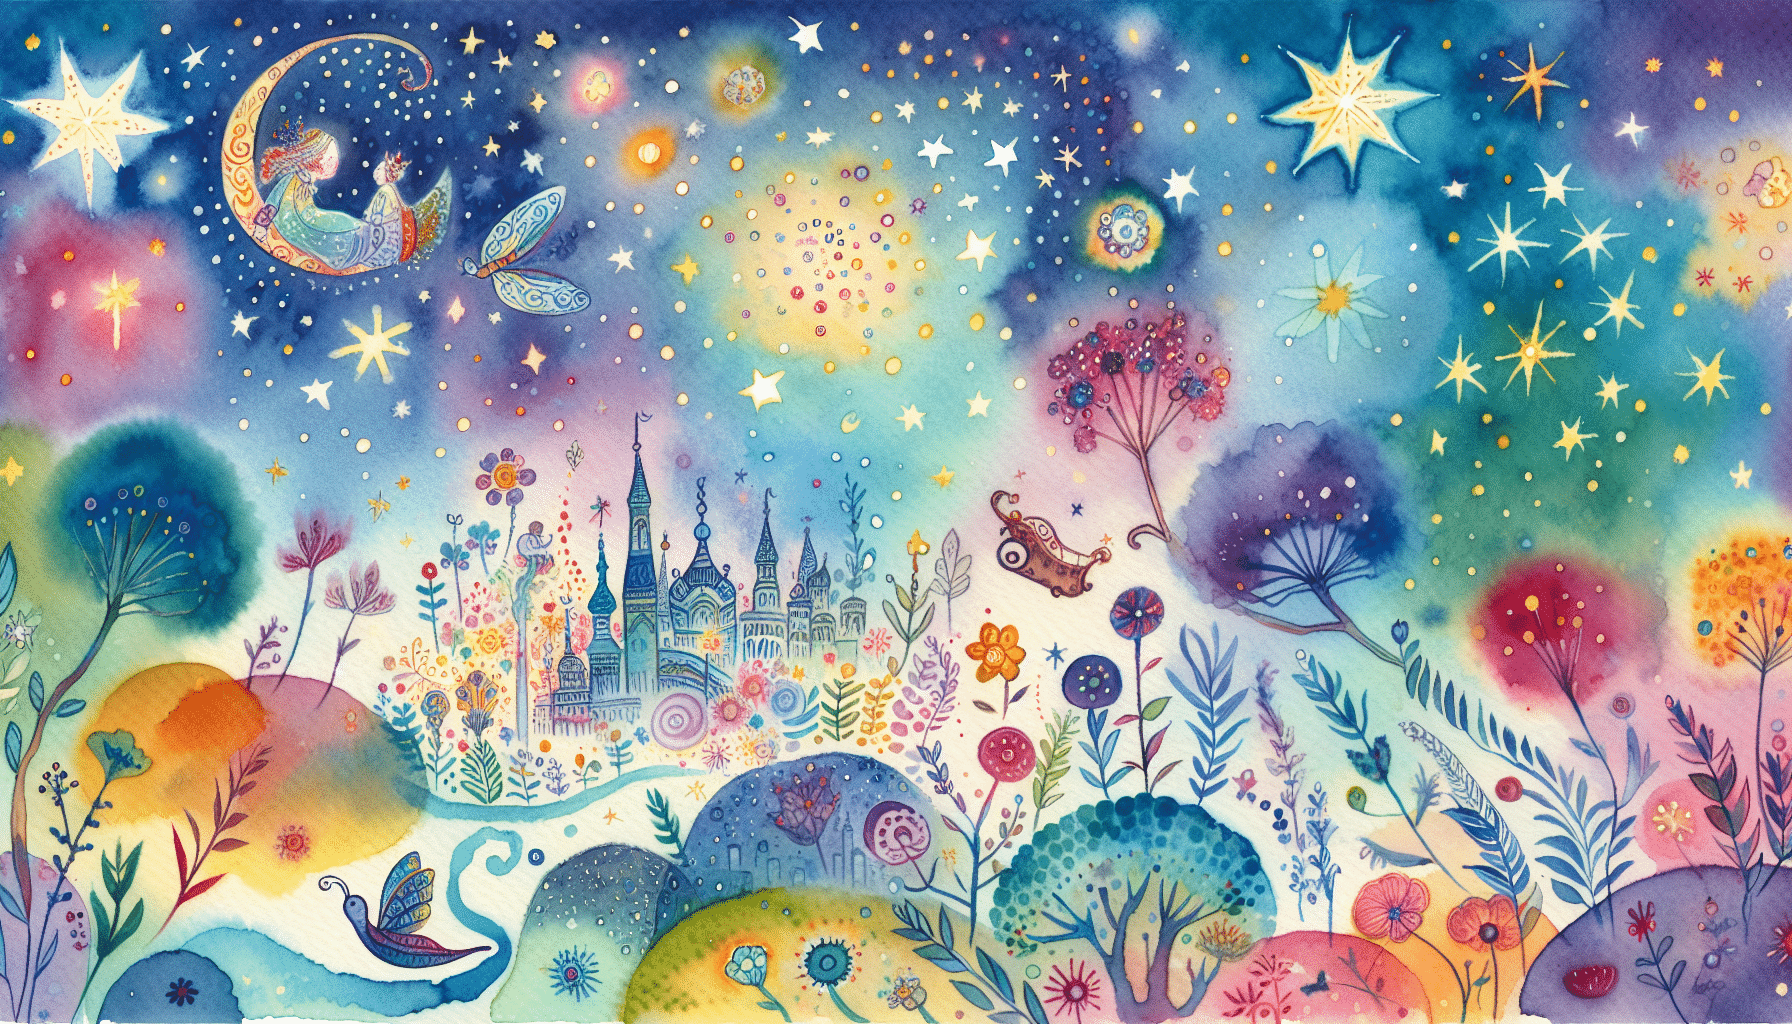 Fairyland Fantasies Princess Bedtime Stories for Sweet Slumber